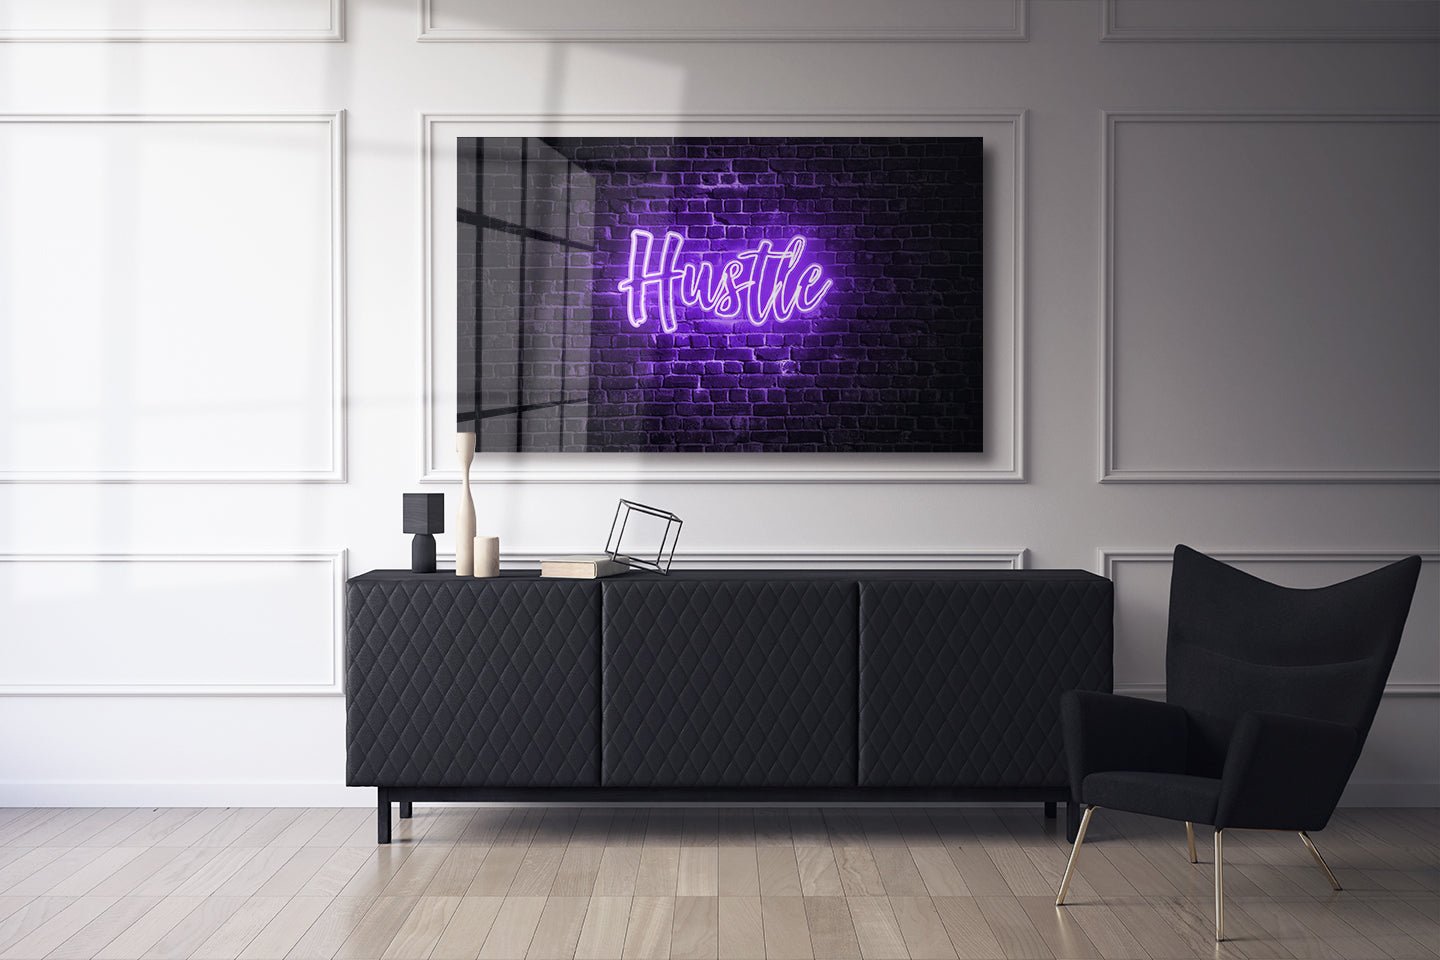 Inspirational Motivational Word Hustle in Purple Neon Light on Brick Wall - OCP TINY THINGS